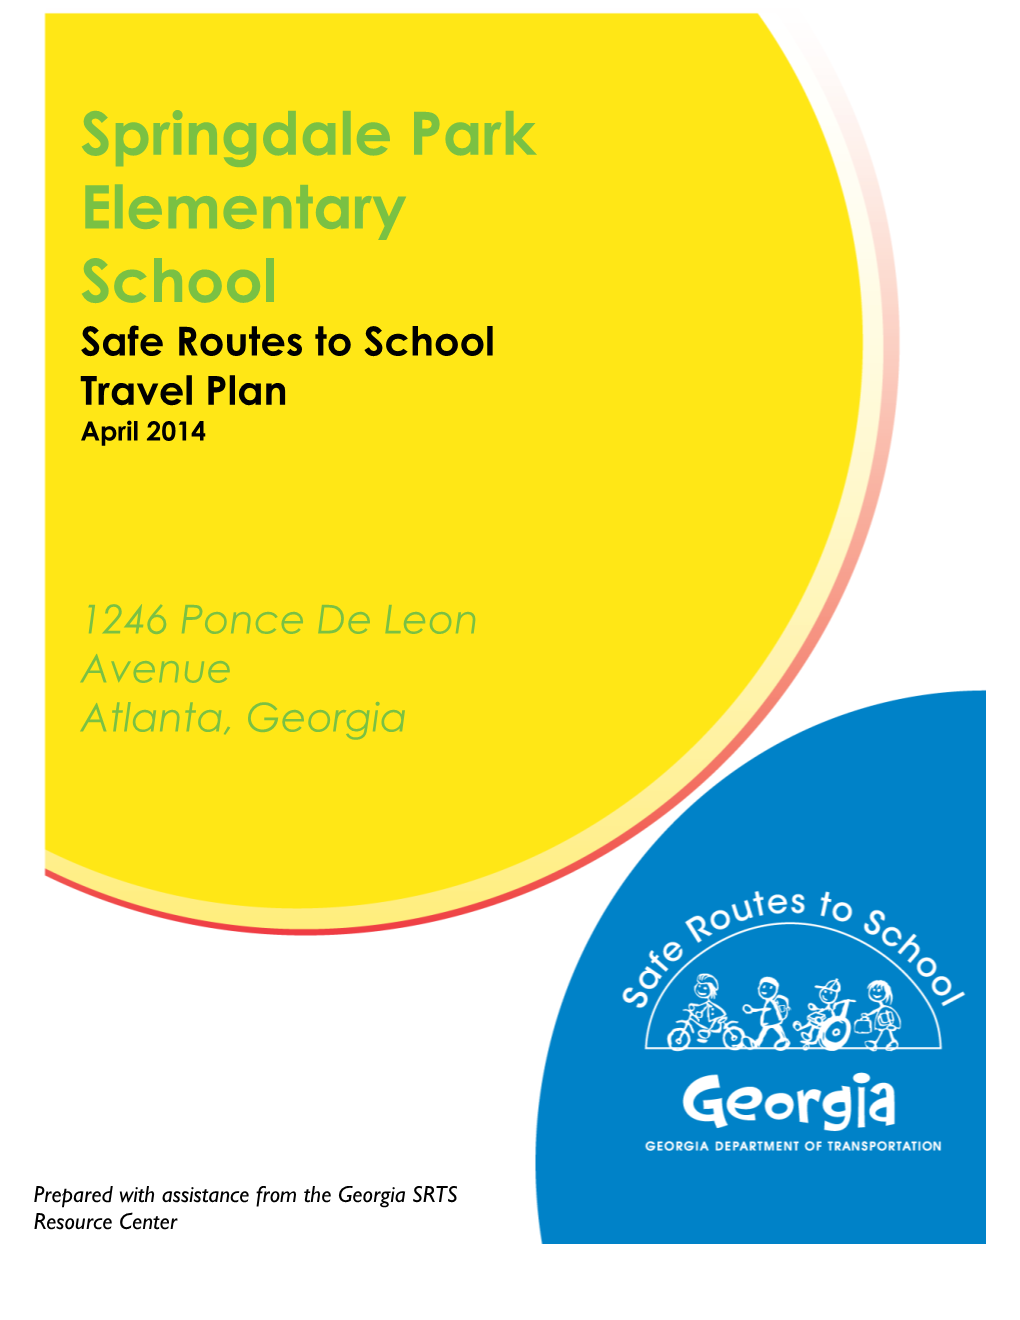 Springdale Park Elementary School Safe Routes to School Travel Plan April 2014